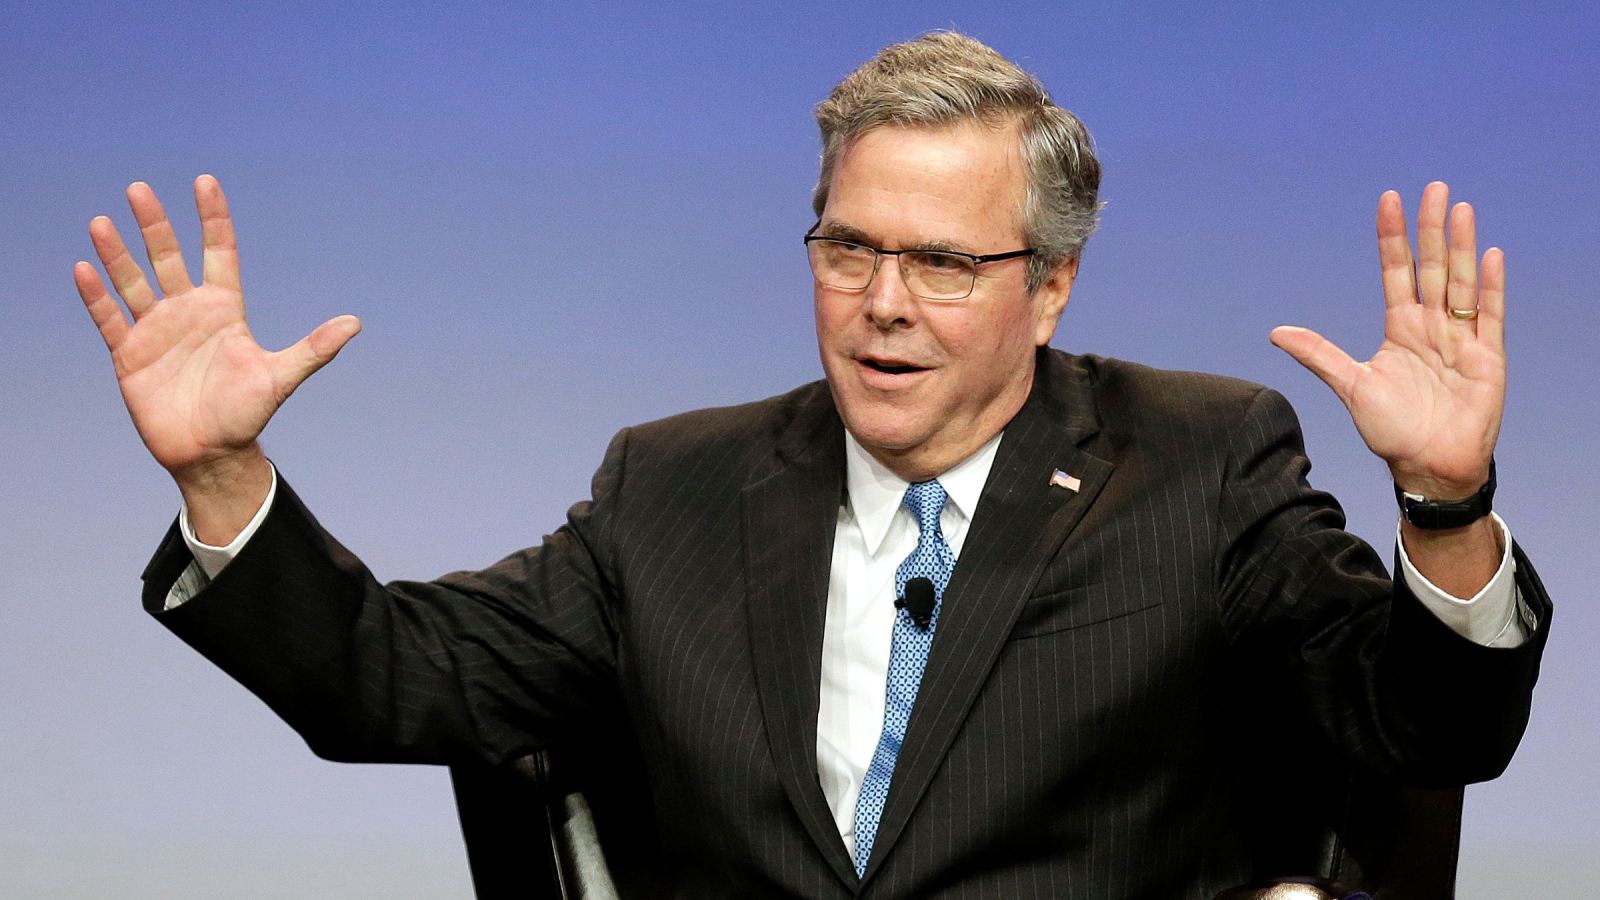 Jeb Bush plummets in latest national poll